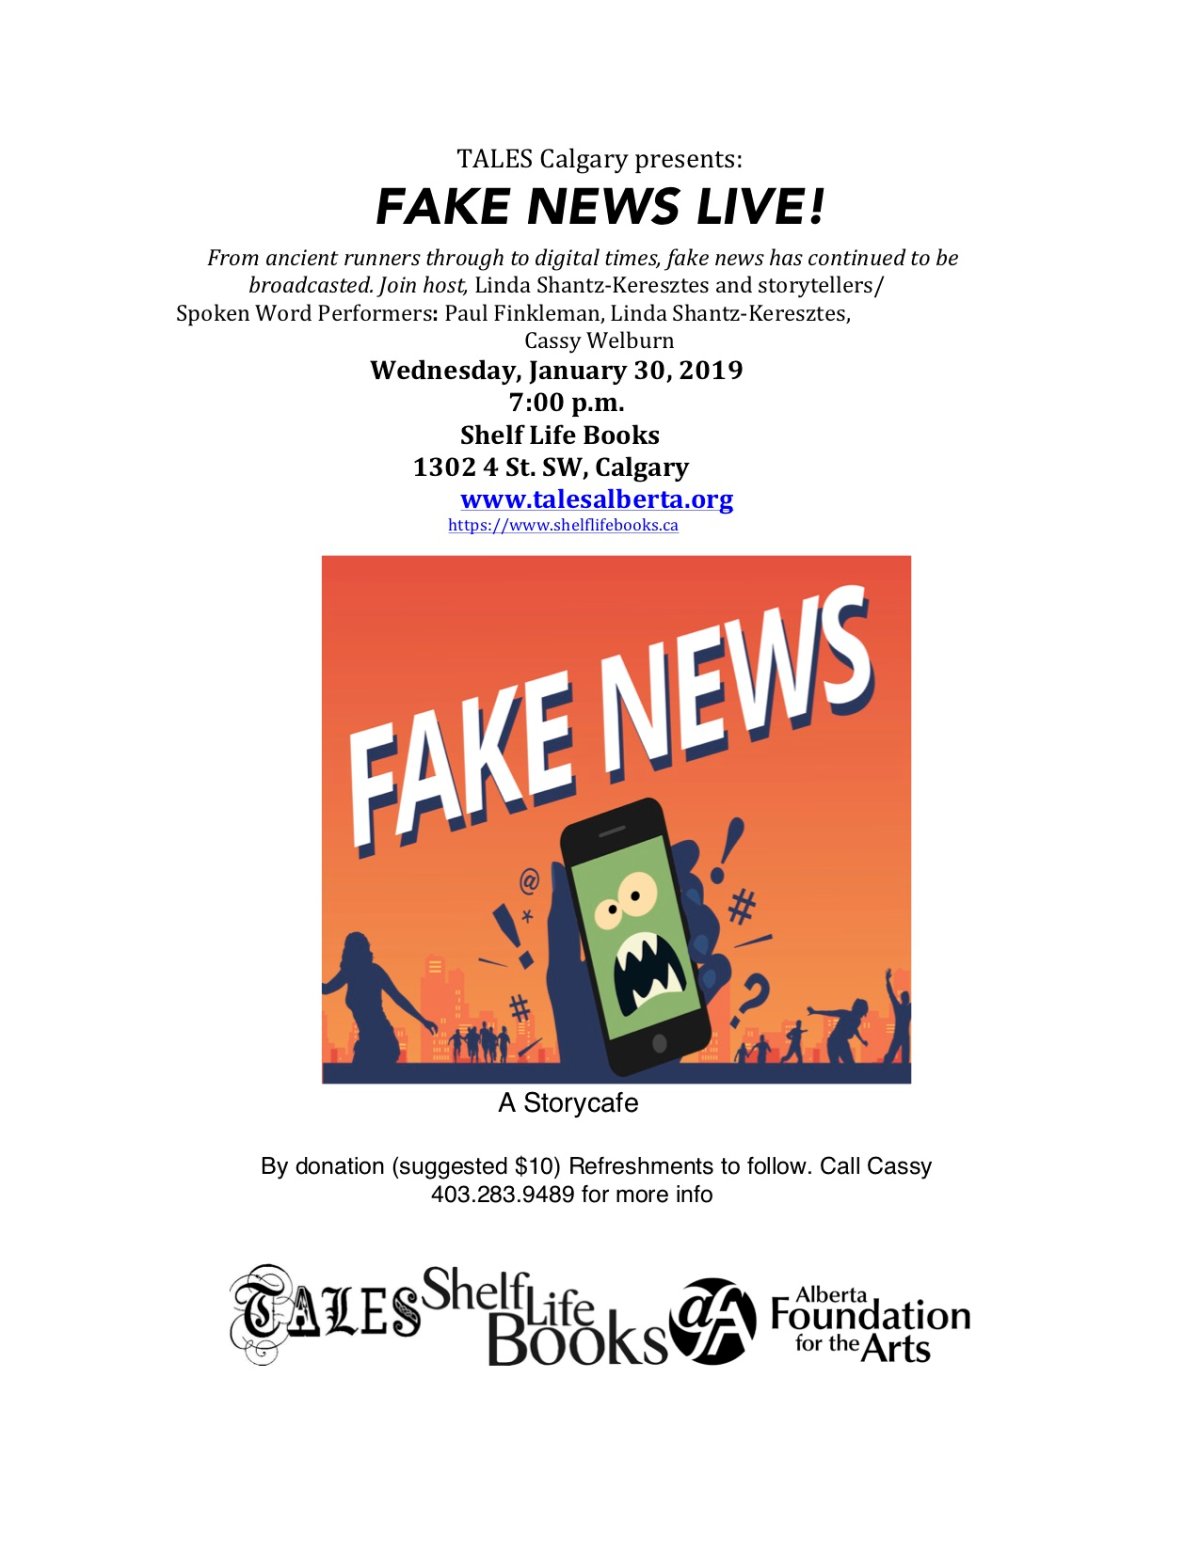 Fakes News Live! - image